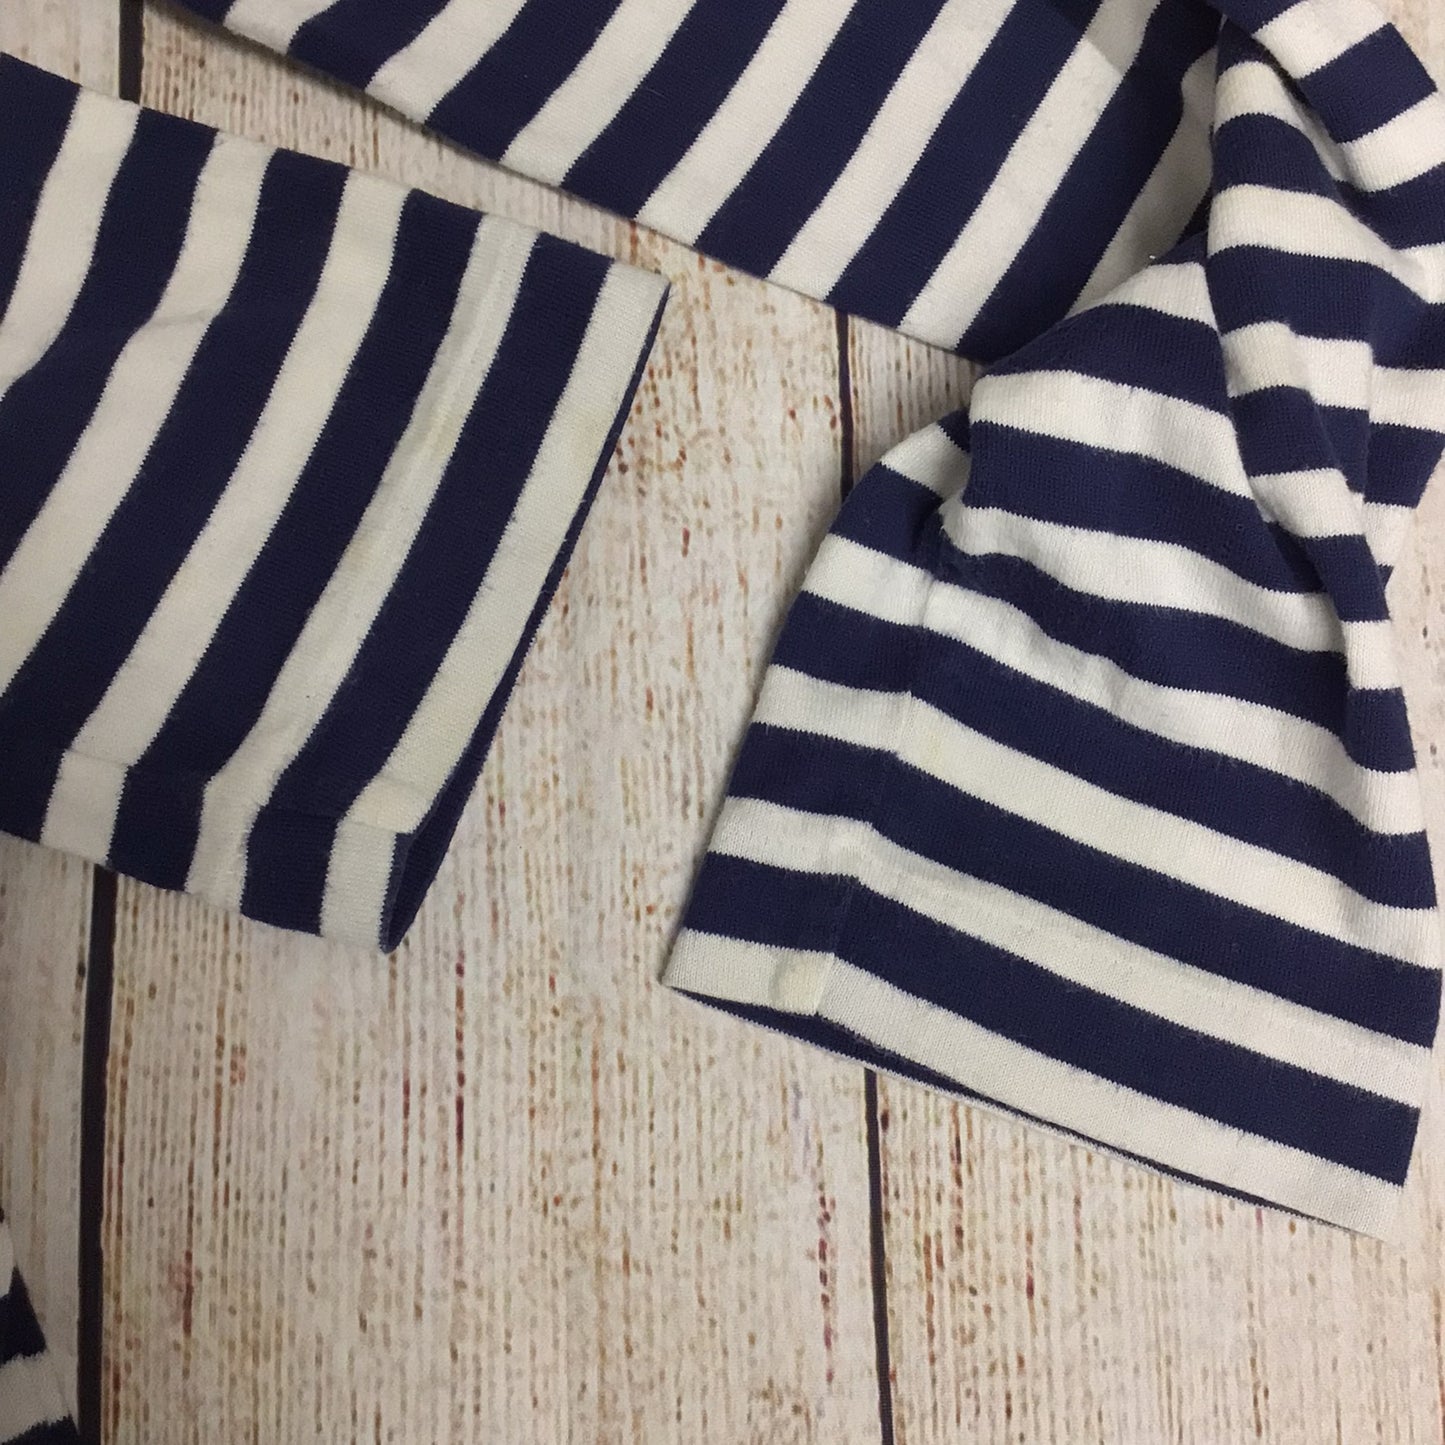 Comme des Garçons PLAY Blue & White Striped Long Sleeved Top 100% Cotton Size S